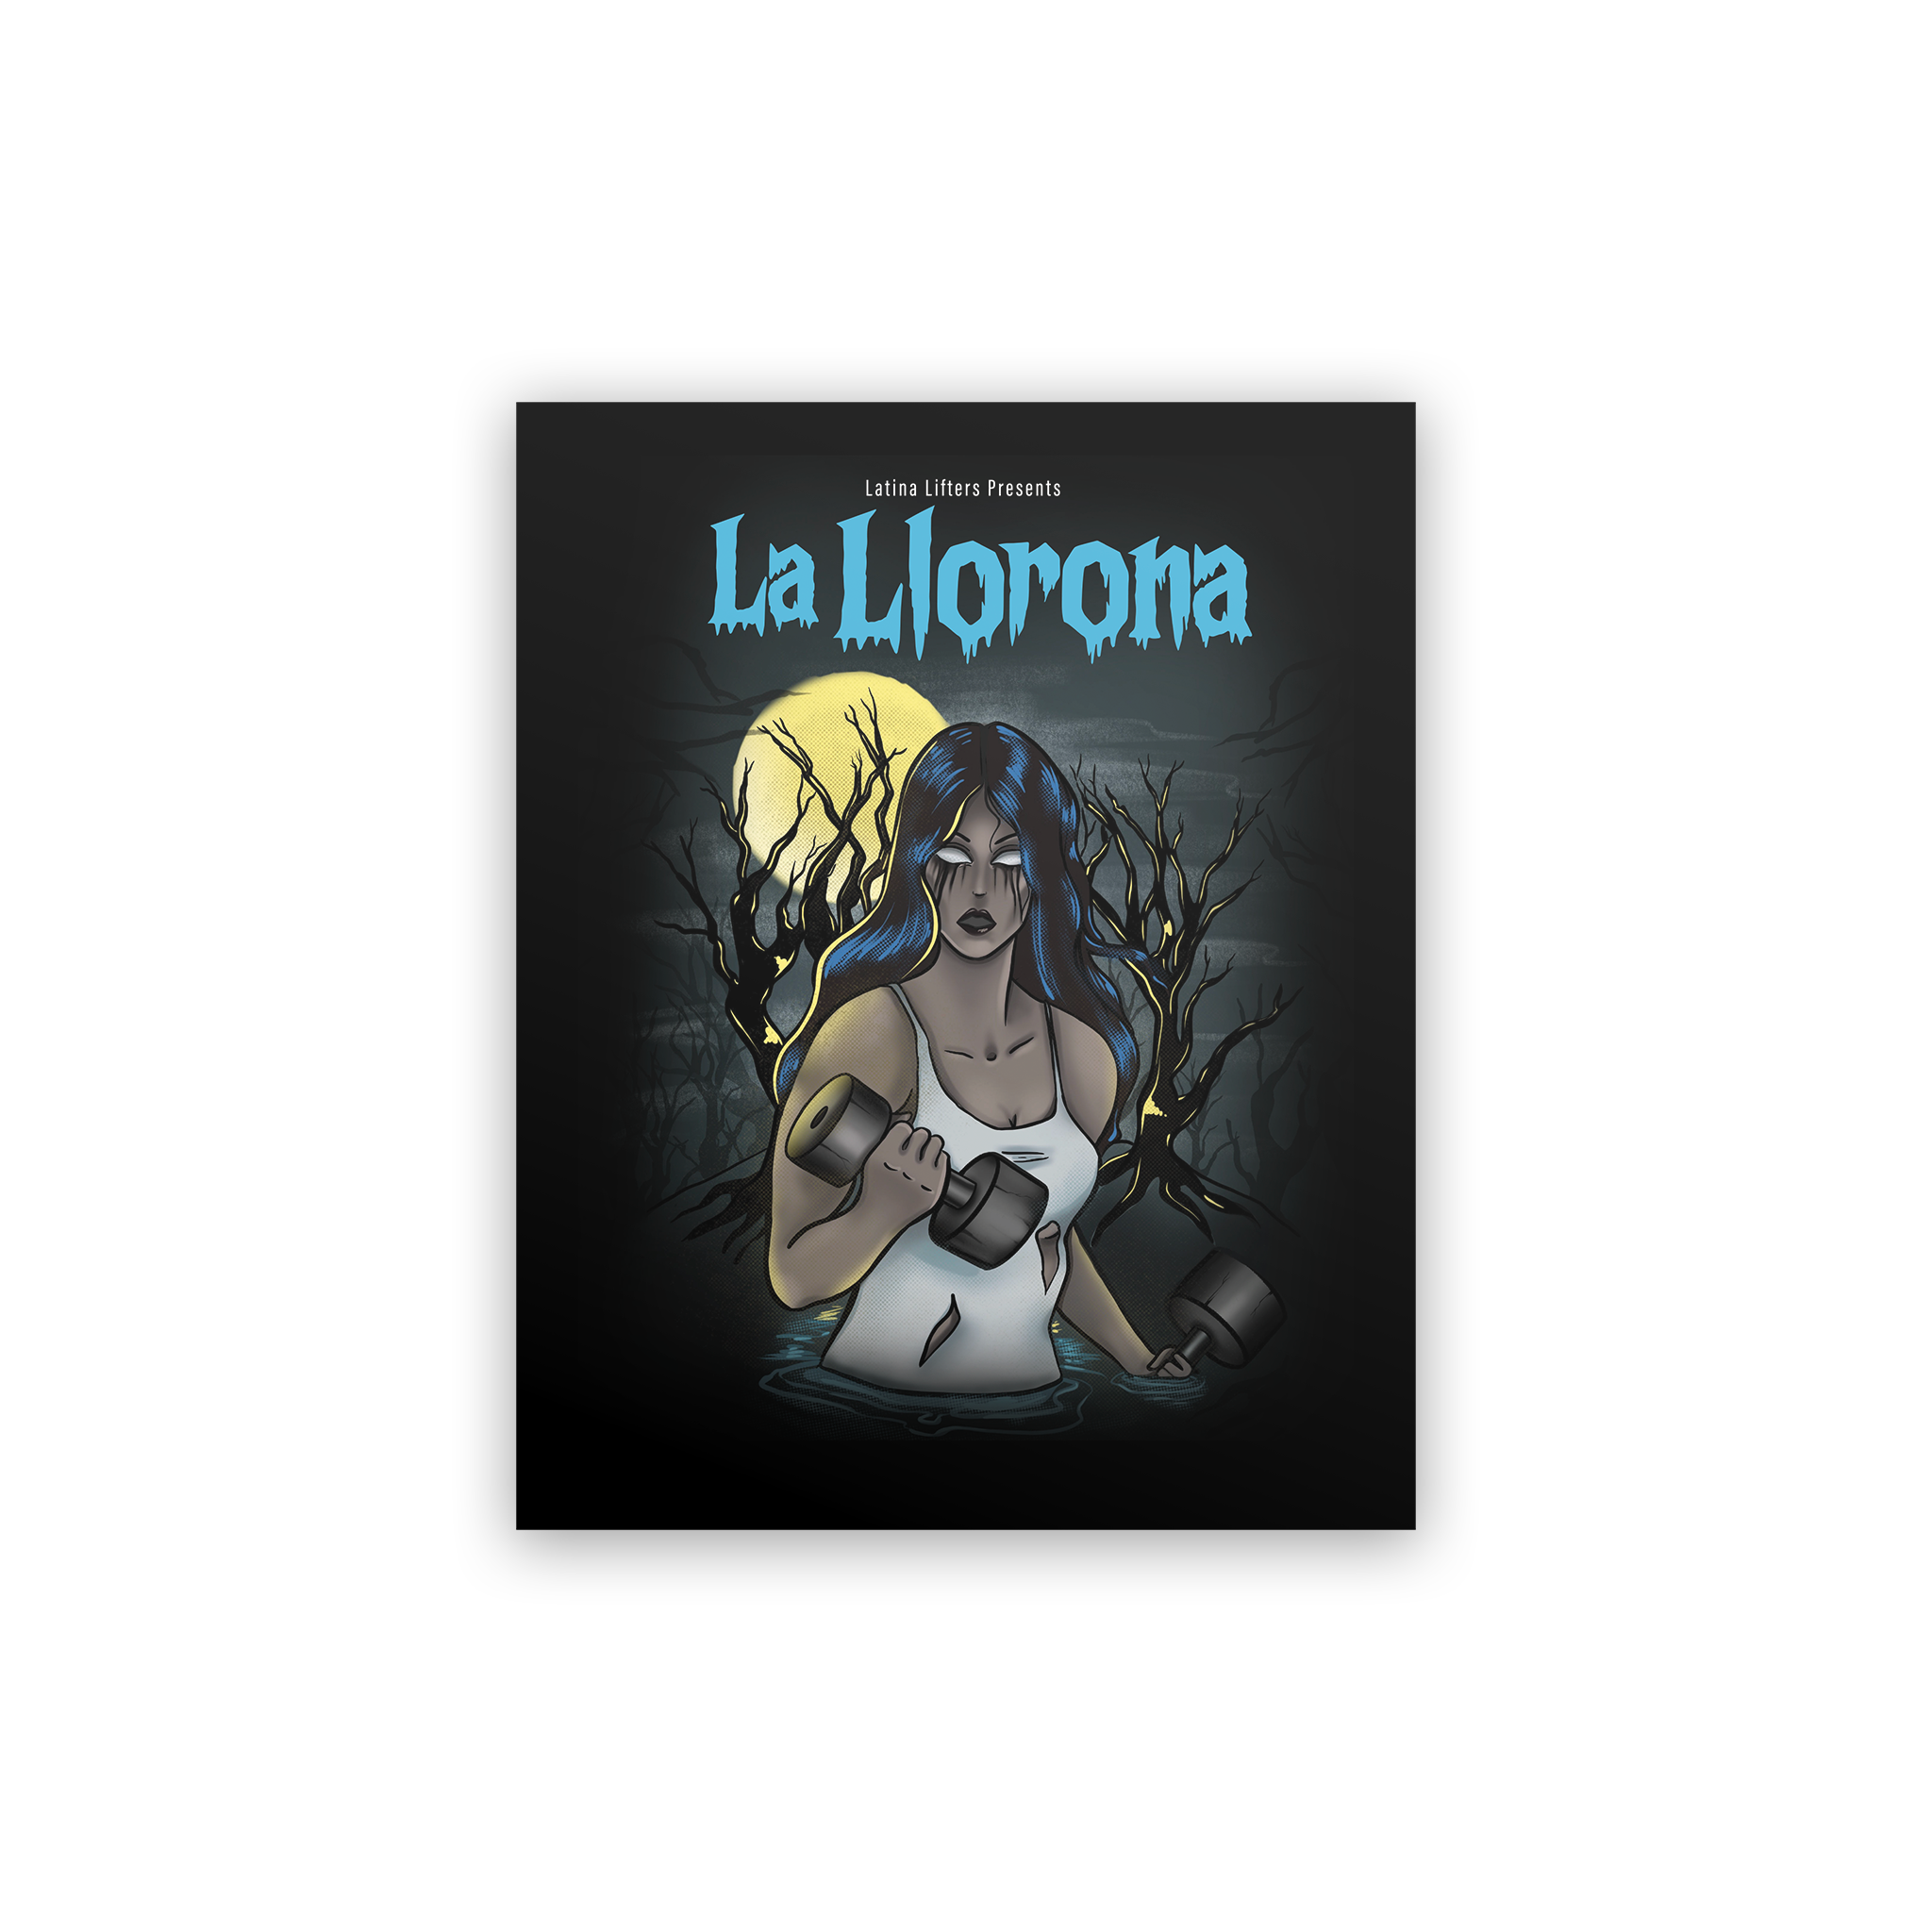 La Llorona sticker - Latina Lifters